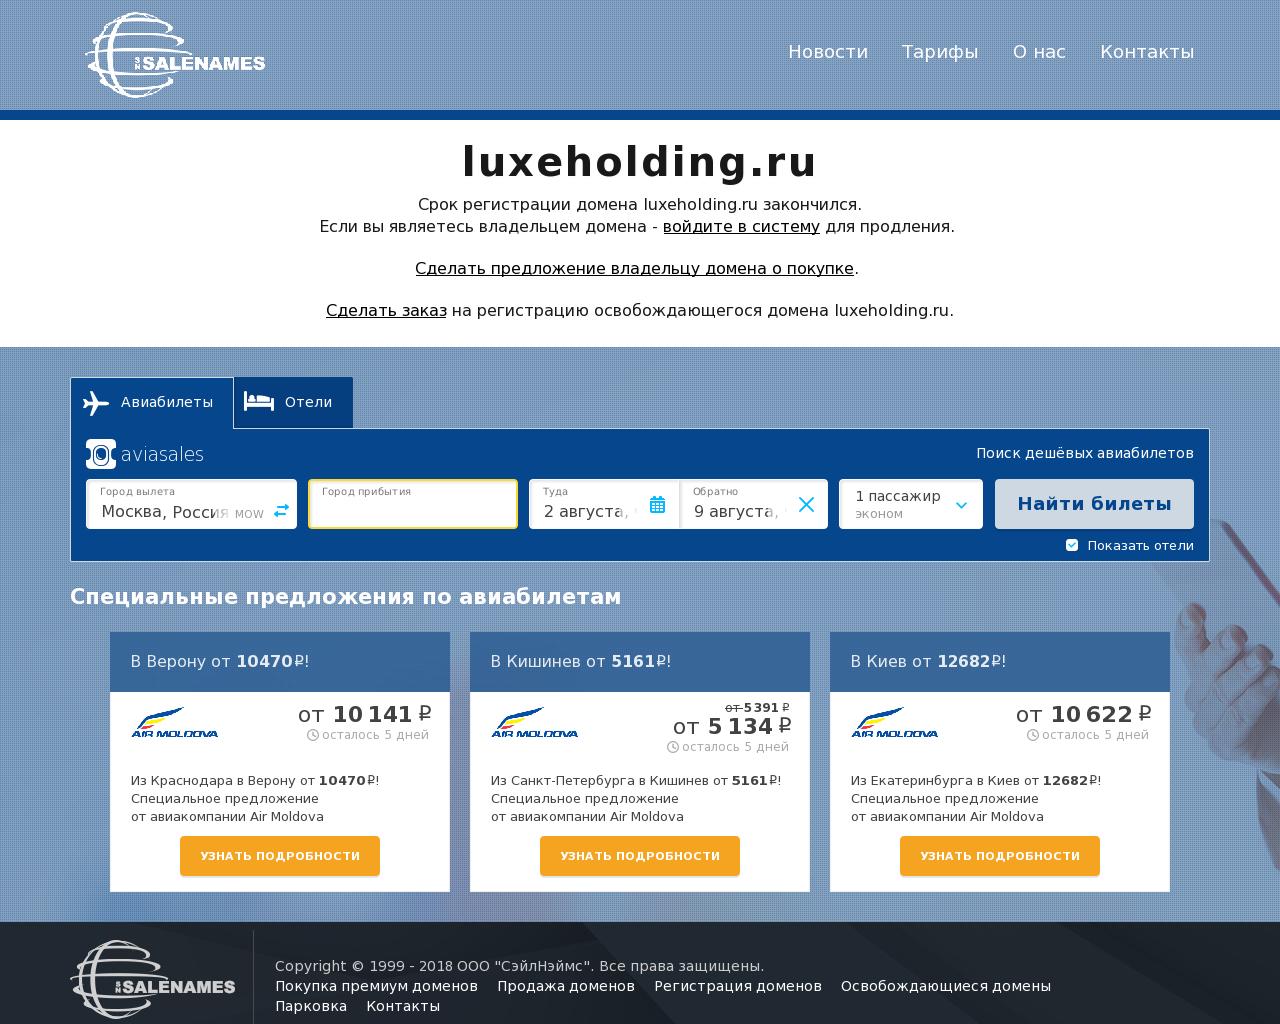 Изображение сайта luxeholding.ru в разрешении 1280x1024